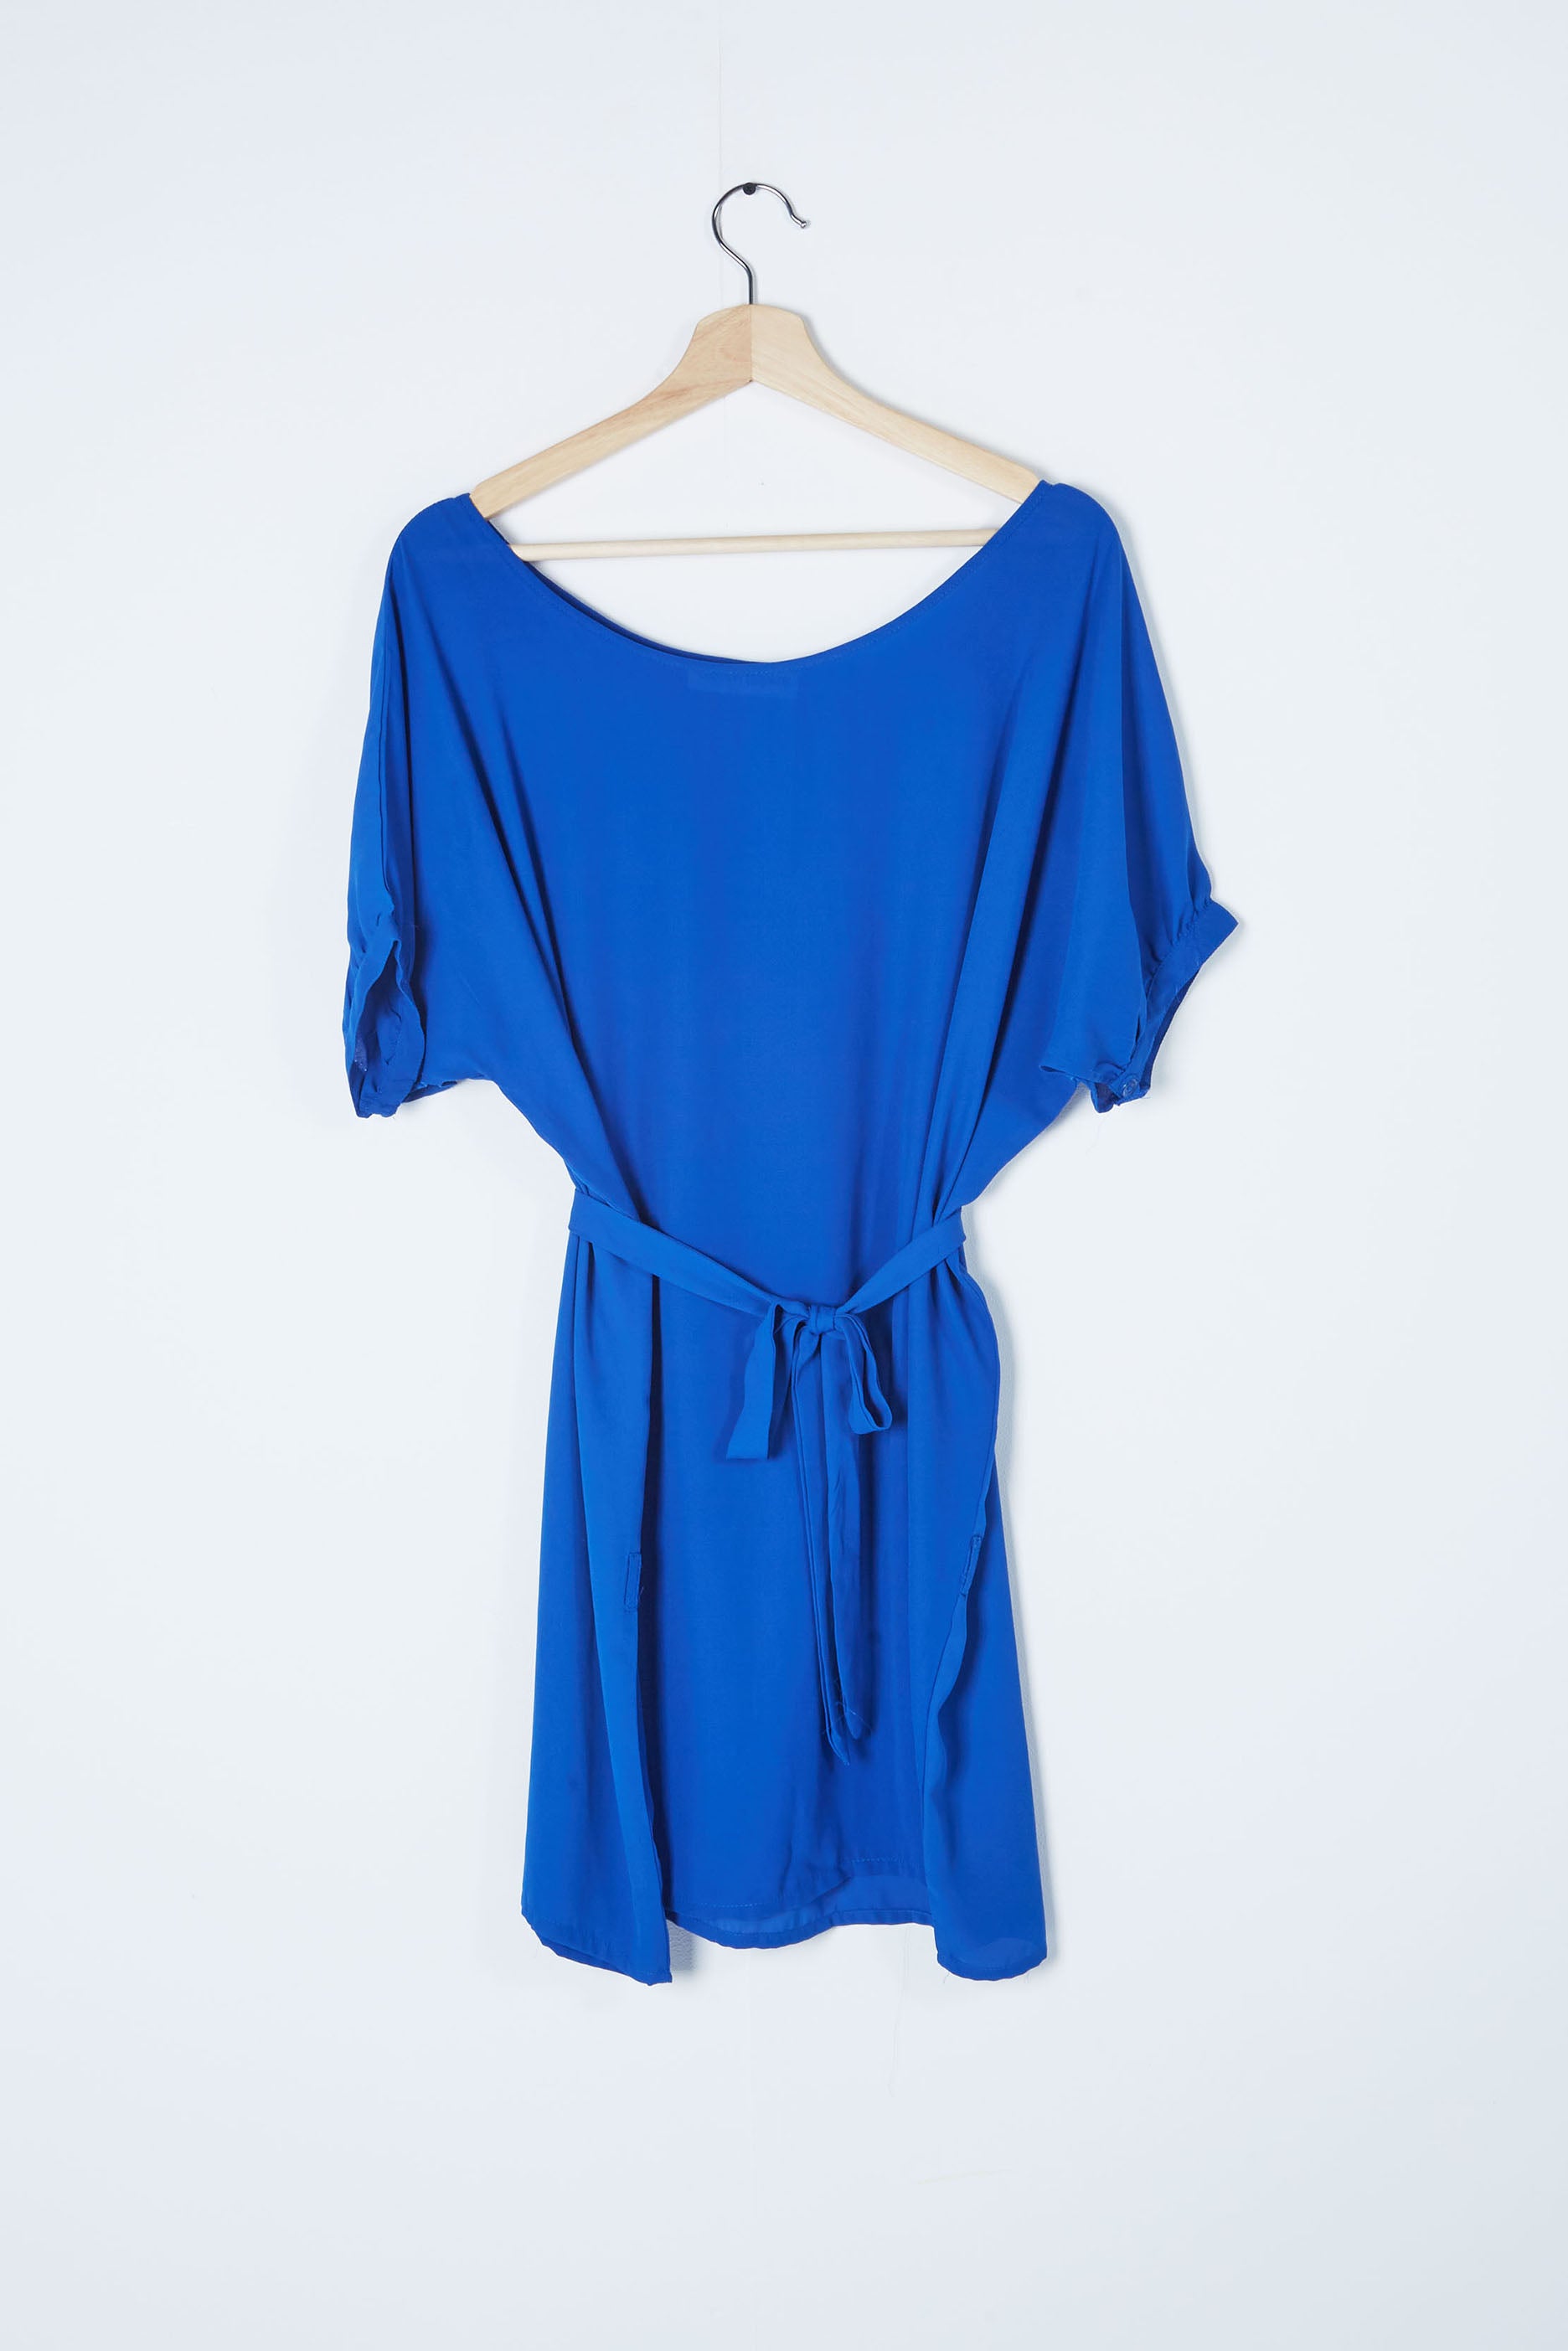 Belted Blue Dress (S/M)